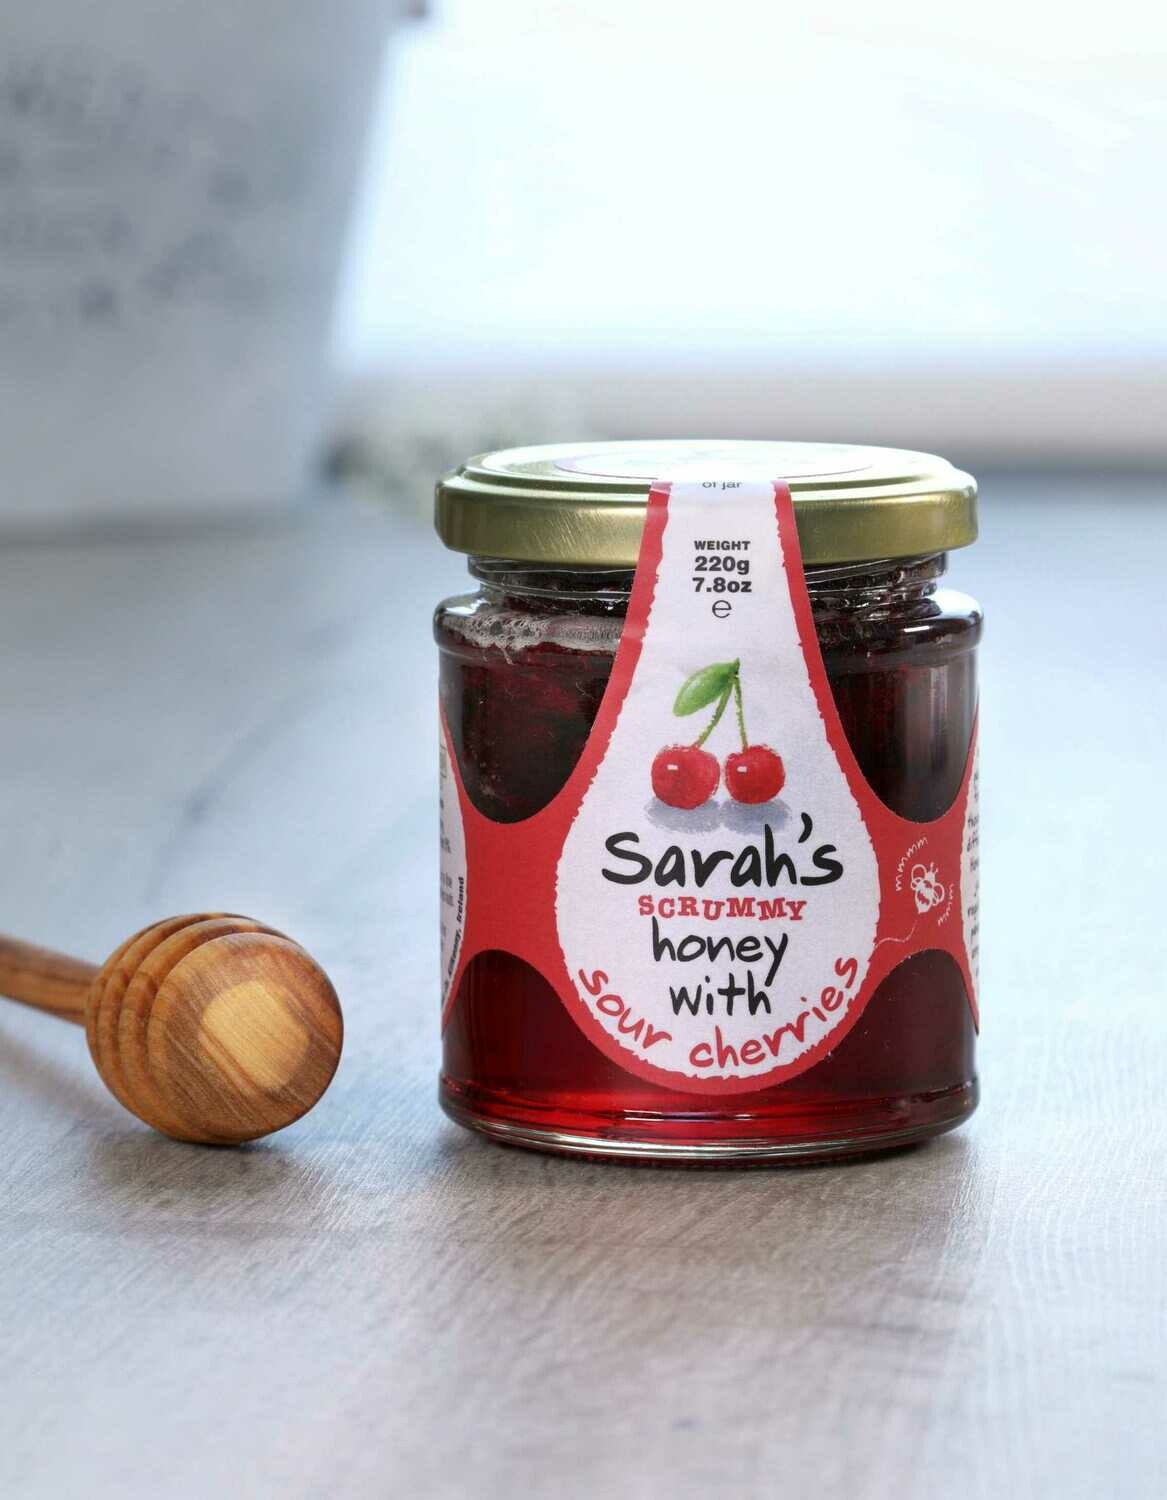 Sarah's Scrummy Acacia Honey with Sour Cherries